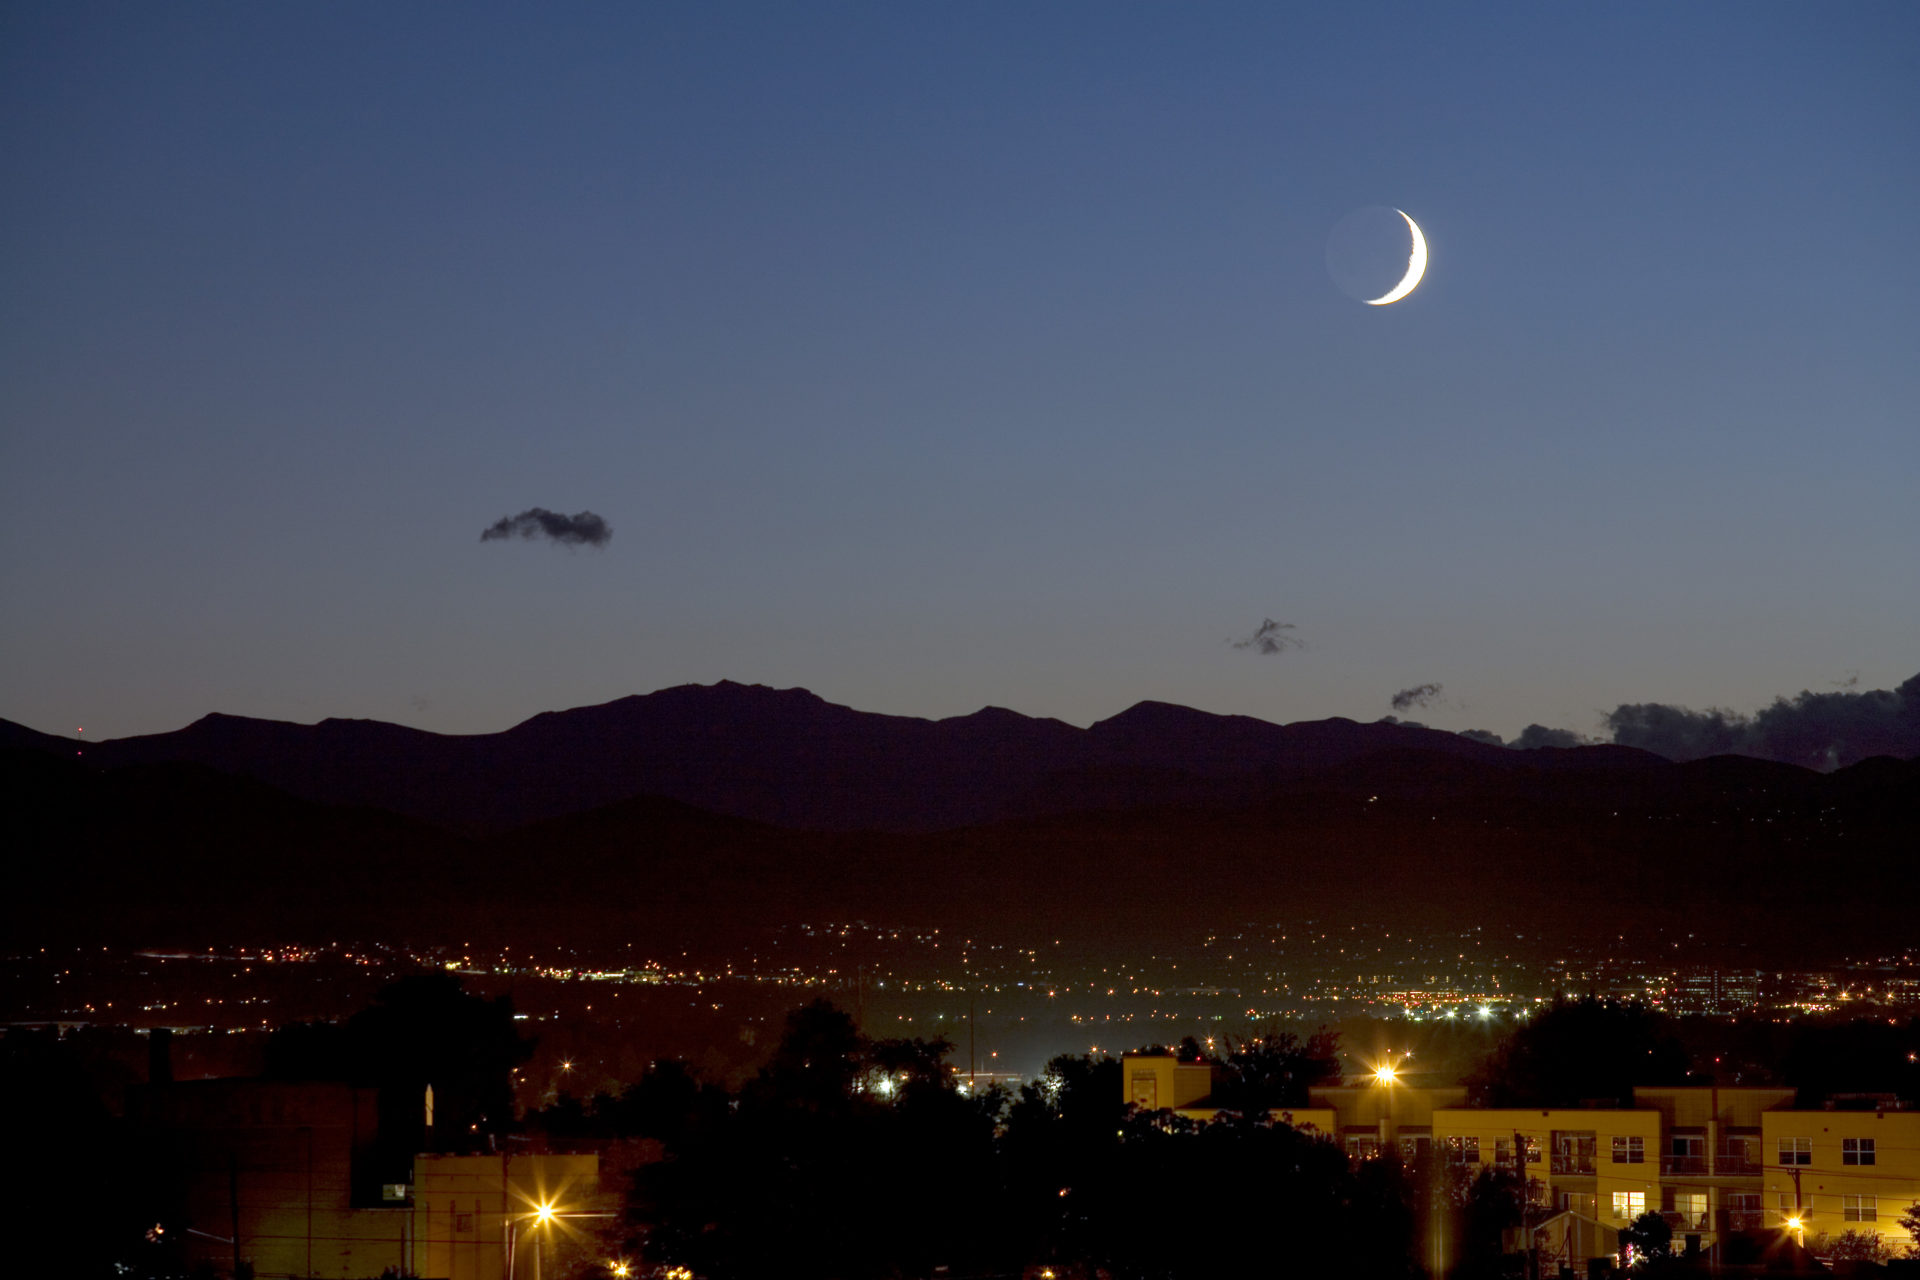 Mount Evans moonrise - August 12, 2010